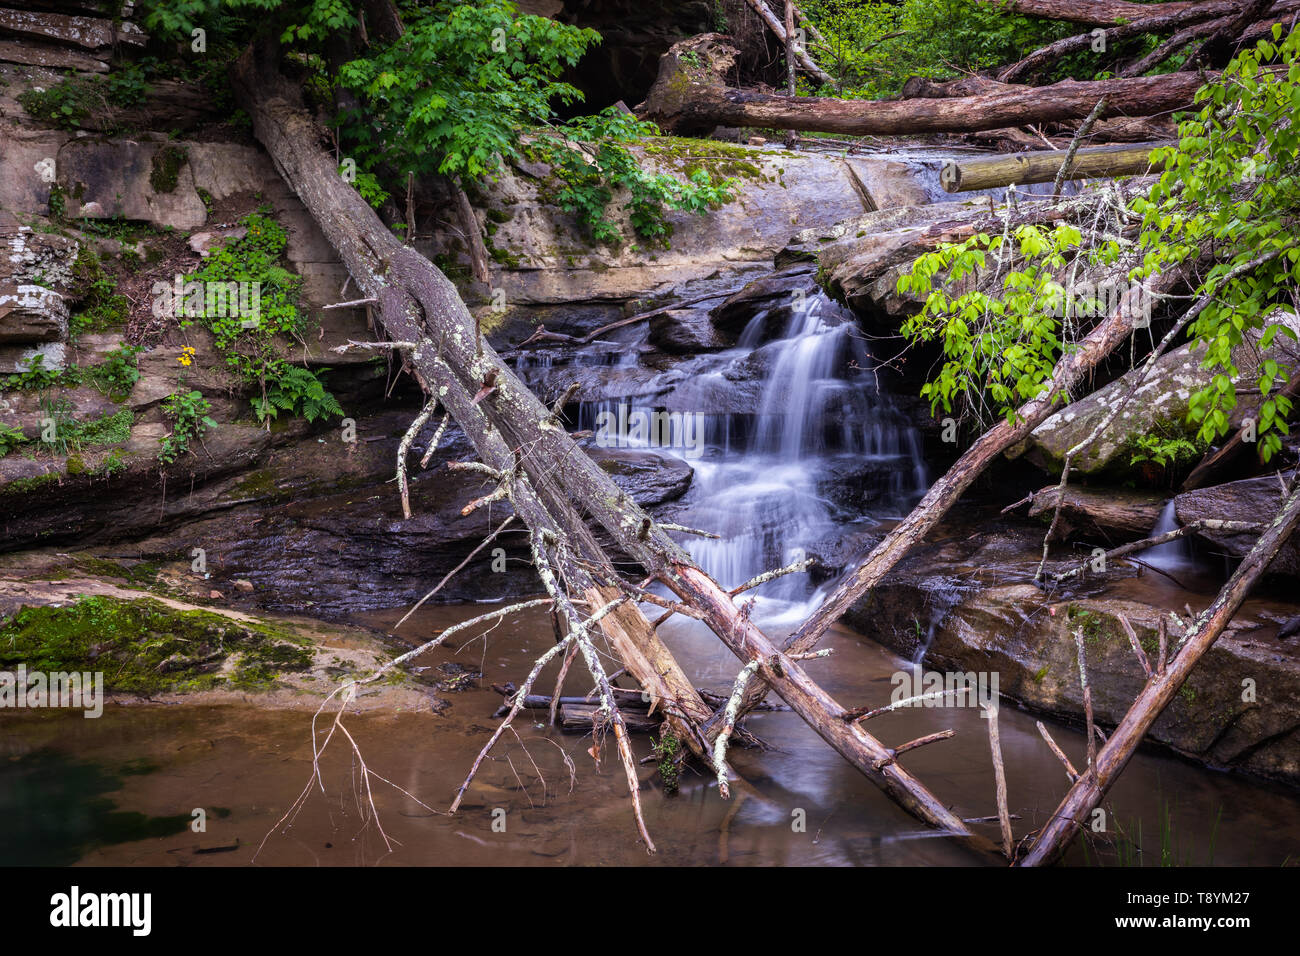 Water falls over rocks at Broke Leg Falls near Salyersville, Ky. Stock Photo